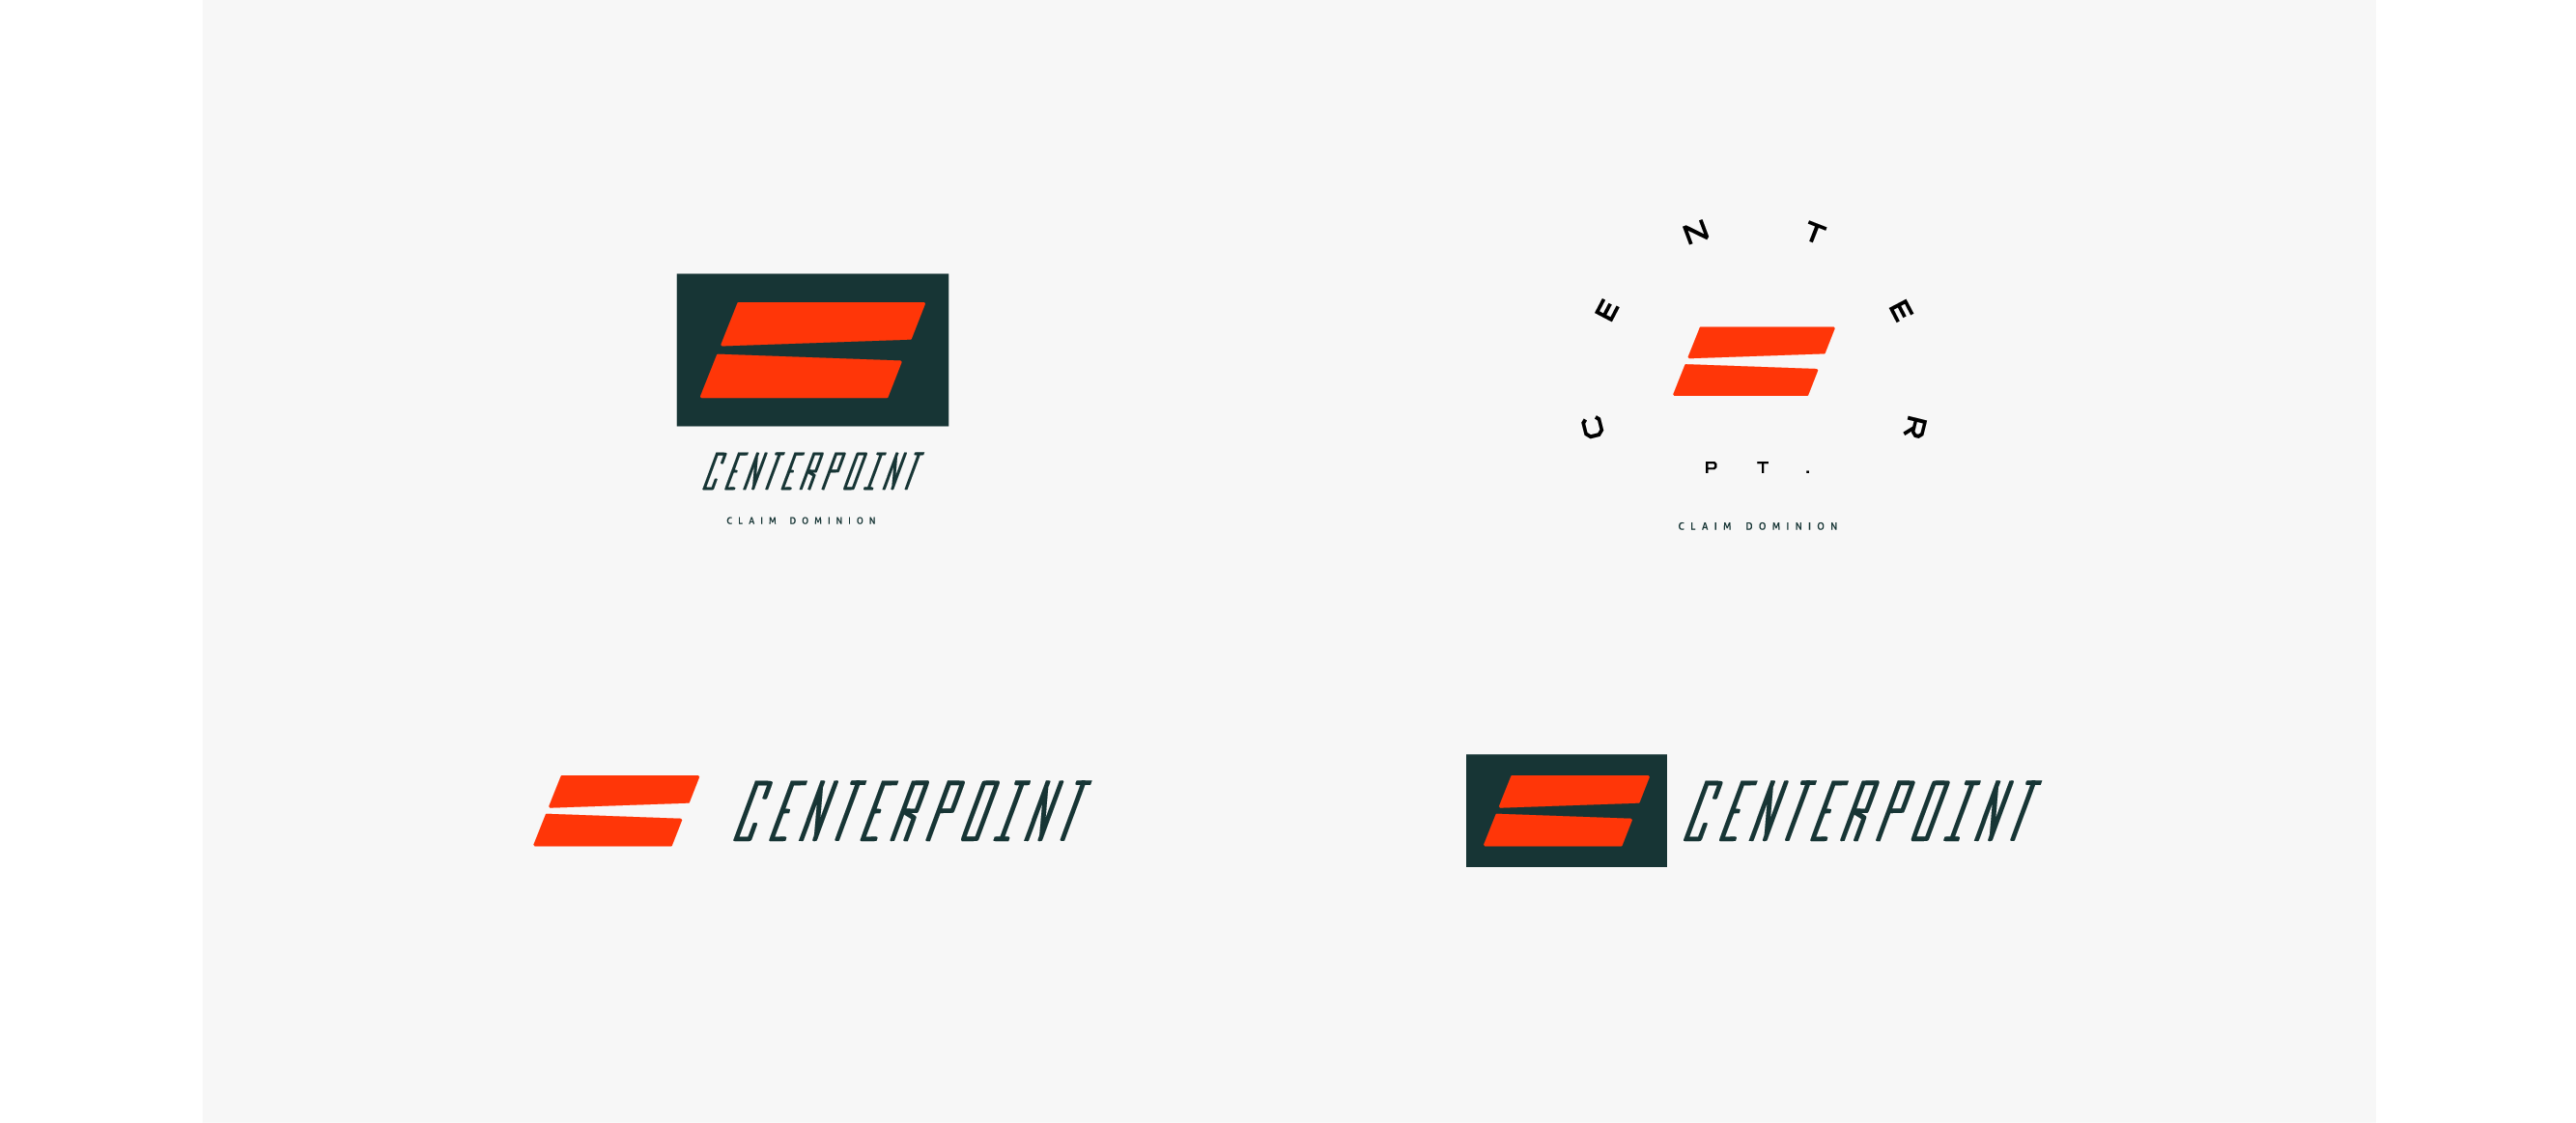 lulofs centerpoint brand identity design visual direction